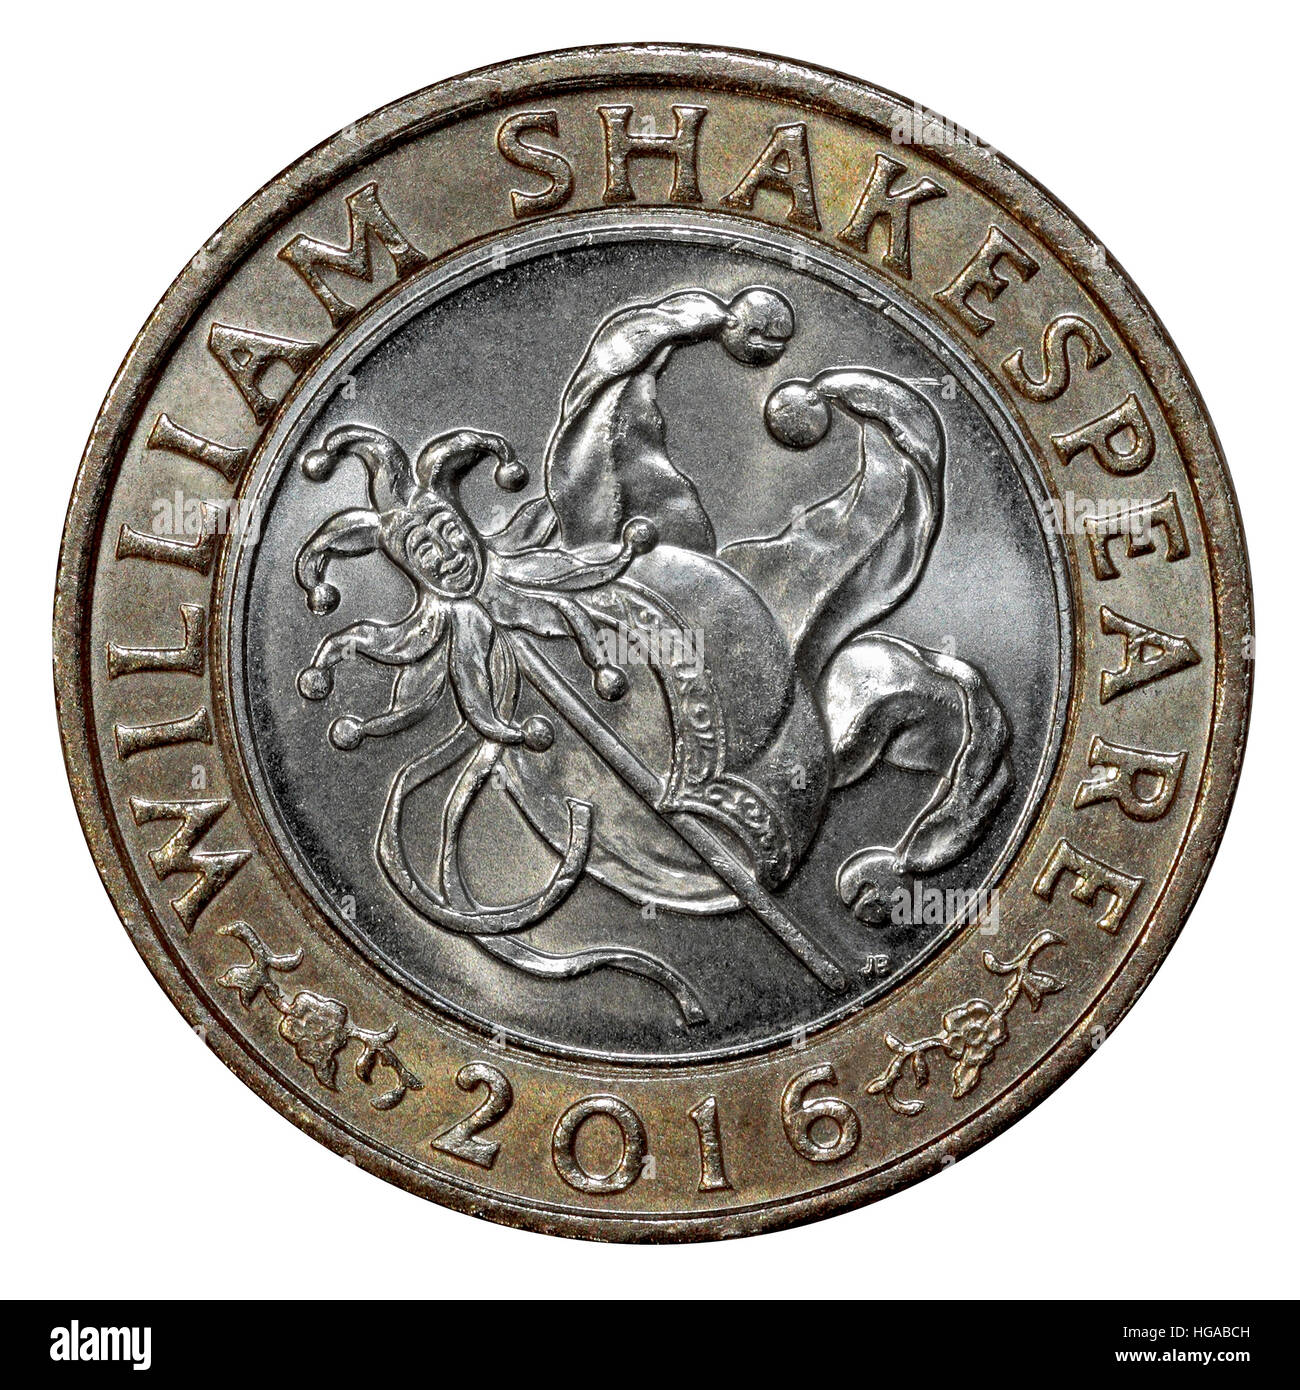 William Shakespeare une émission commémorative 2016 £2 Coin tails side jester Banque D'Images